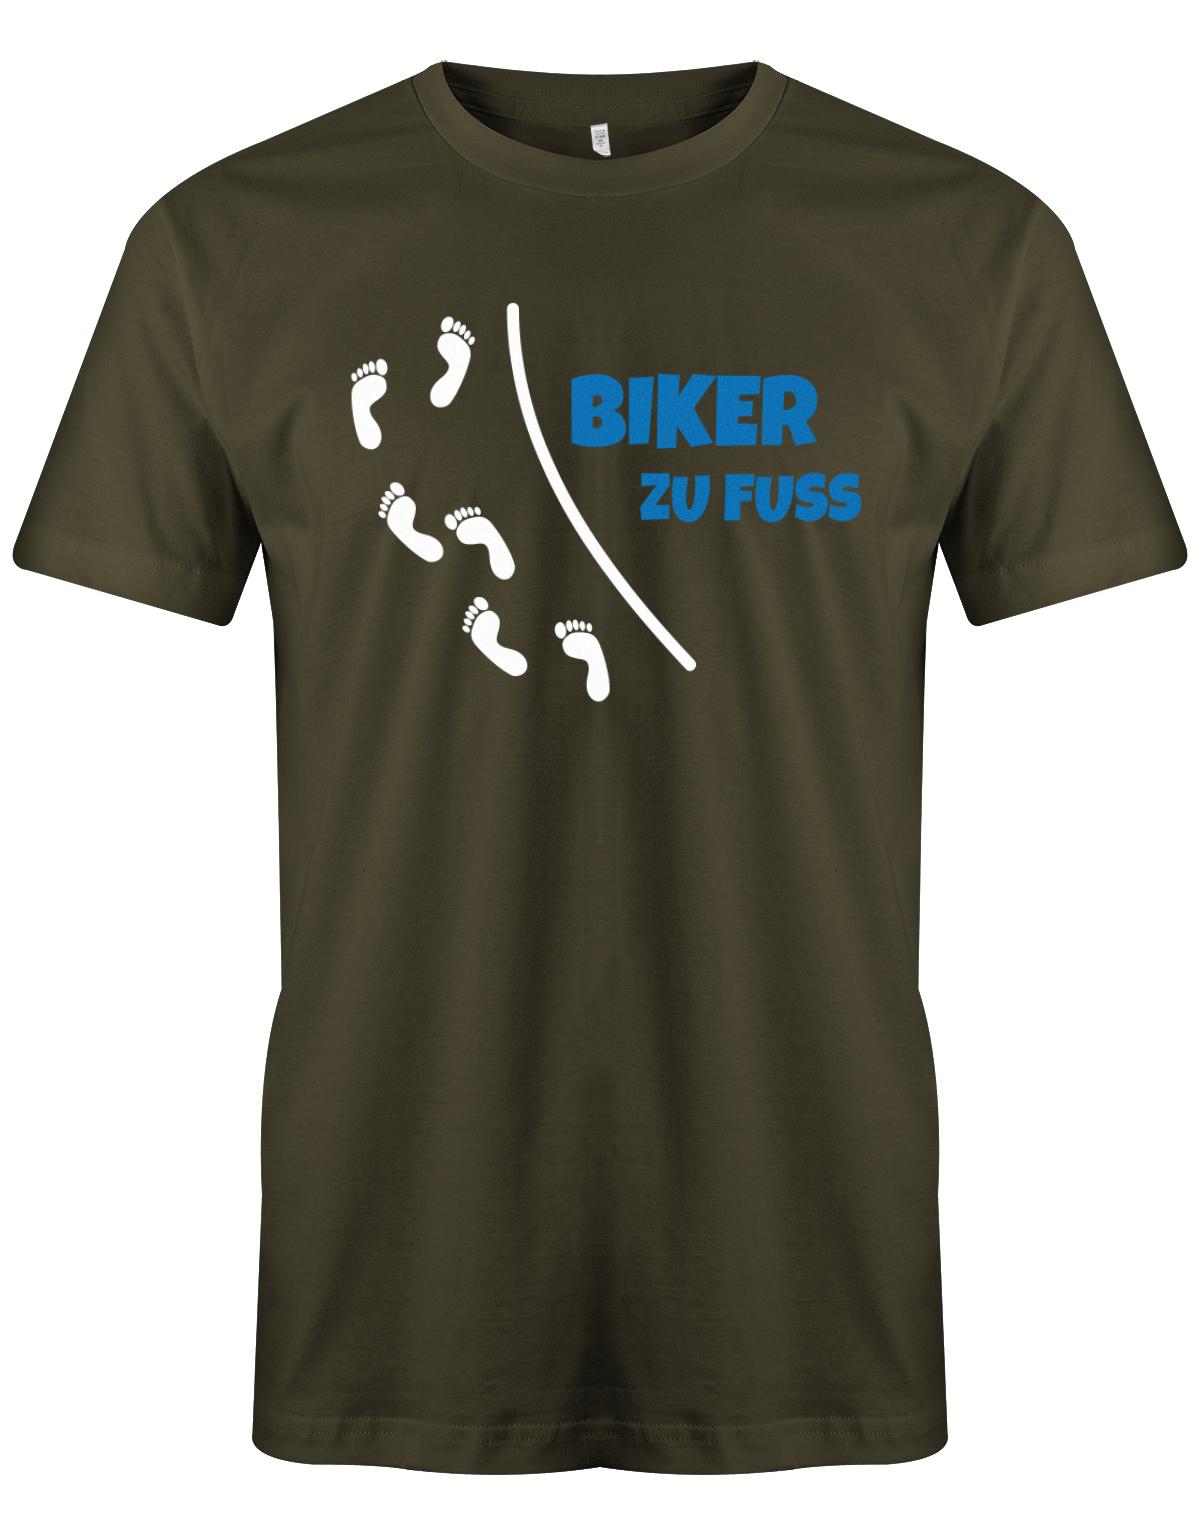 Biker-Zu-Fuss-Herren-Shirt-Army